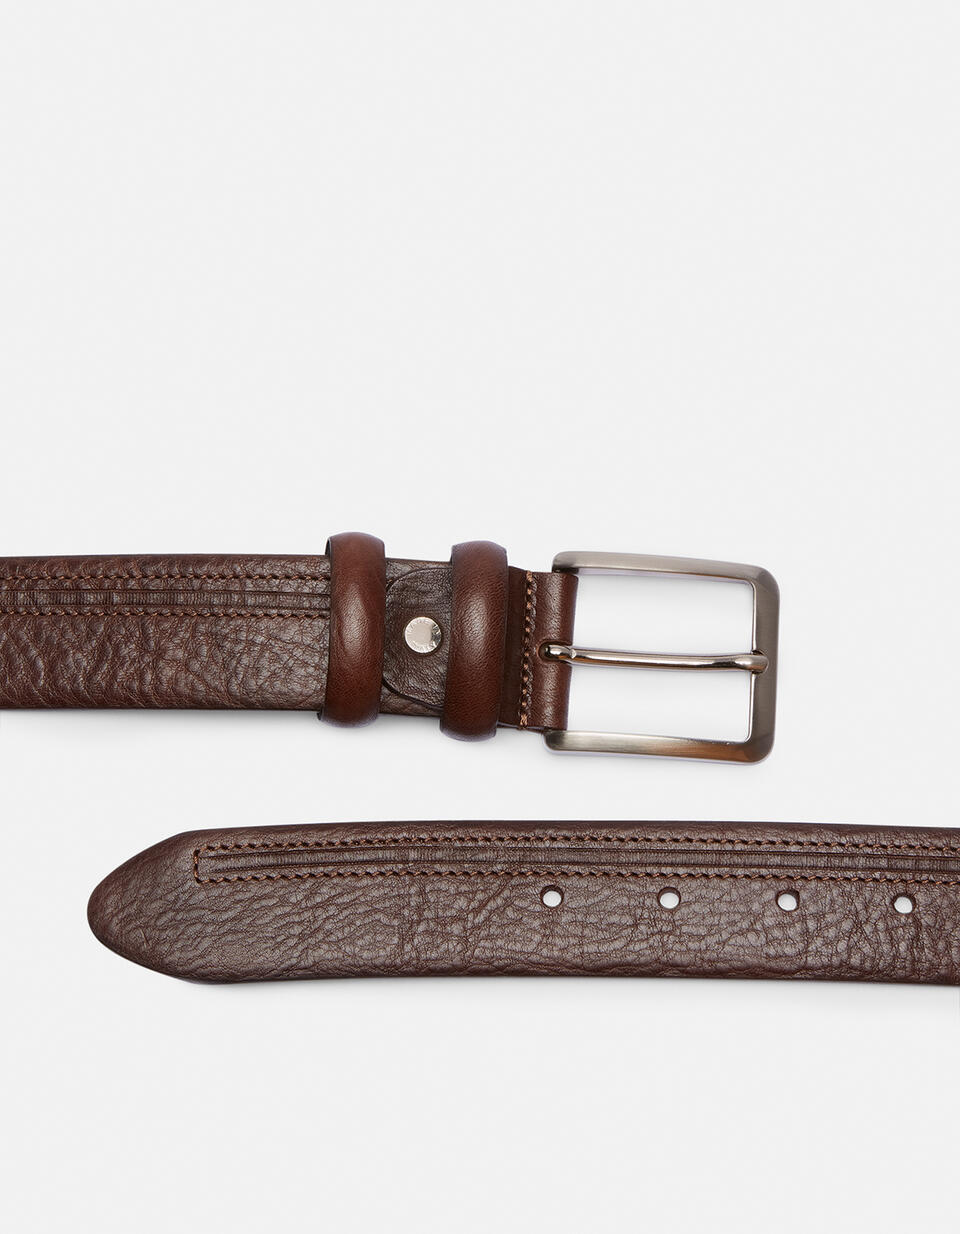 Cintura cucitura laterale 3,5 cm Testa di moro  - Cinture Uomo - Cinture - Cuoieria Fiorentina